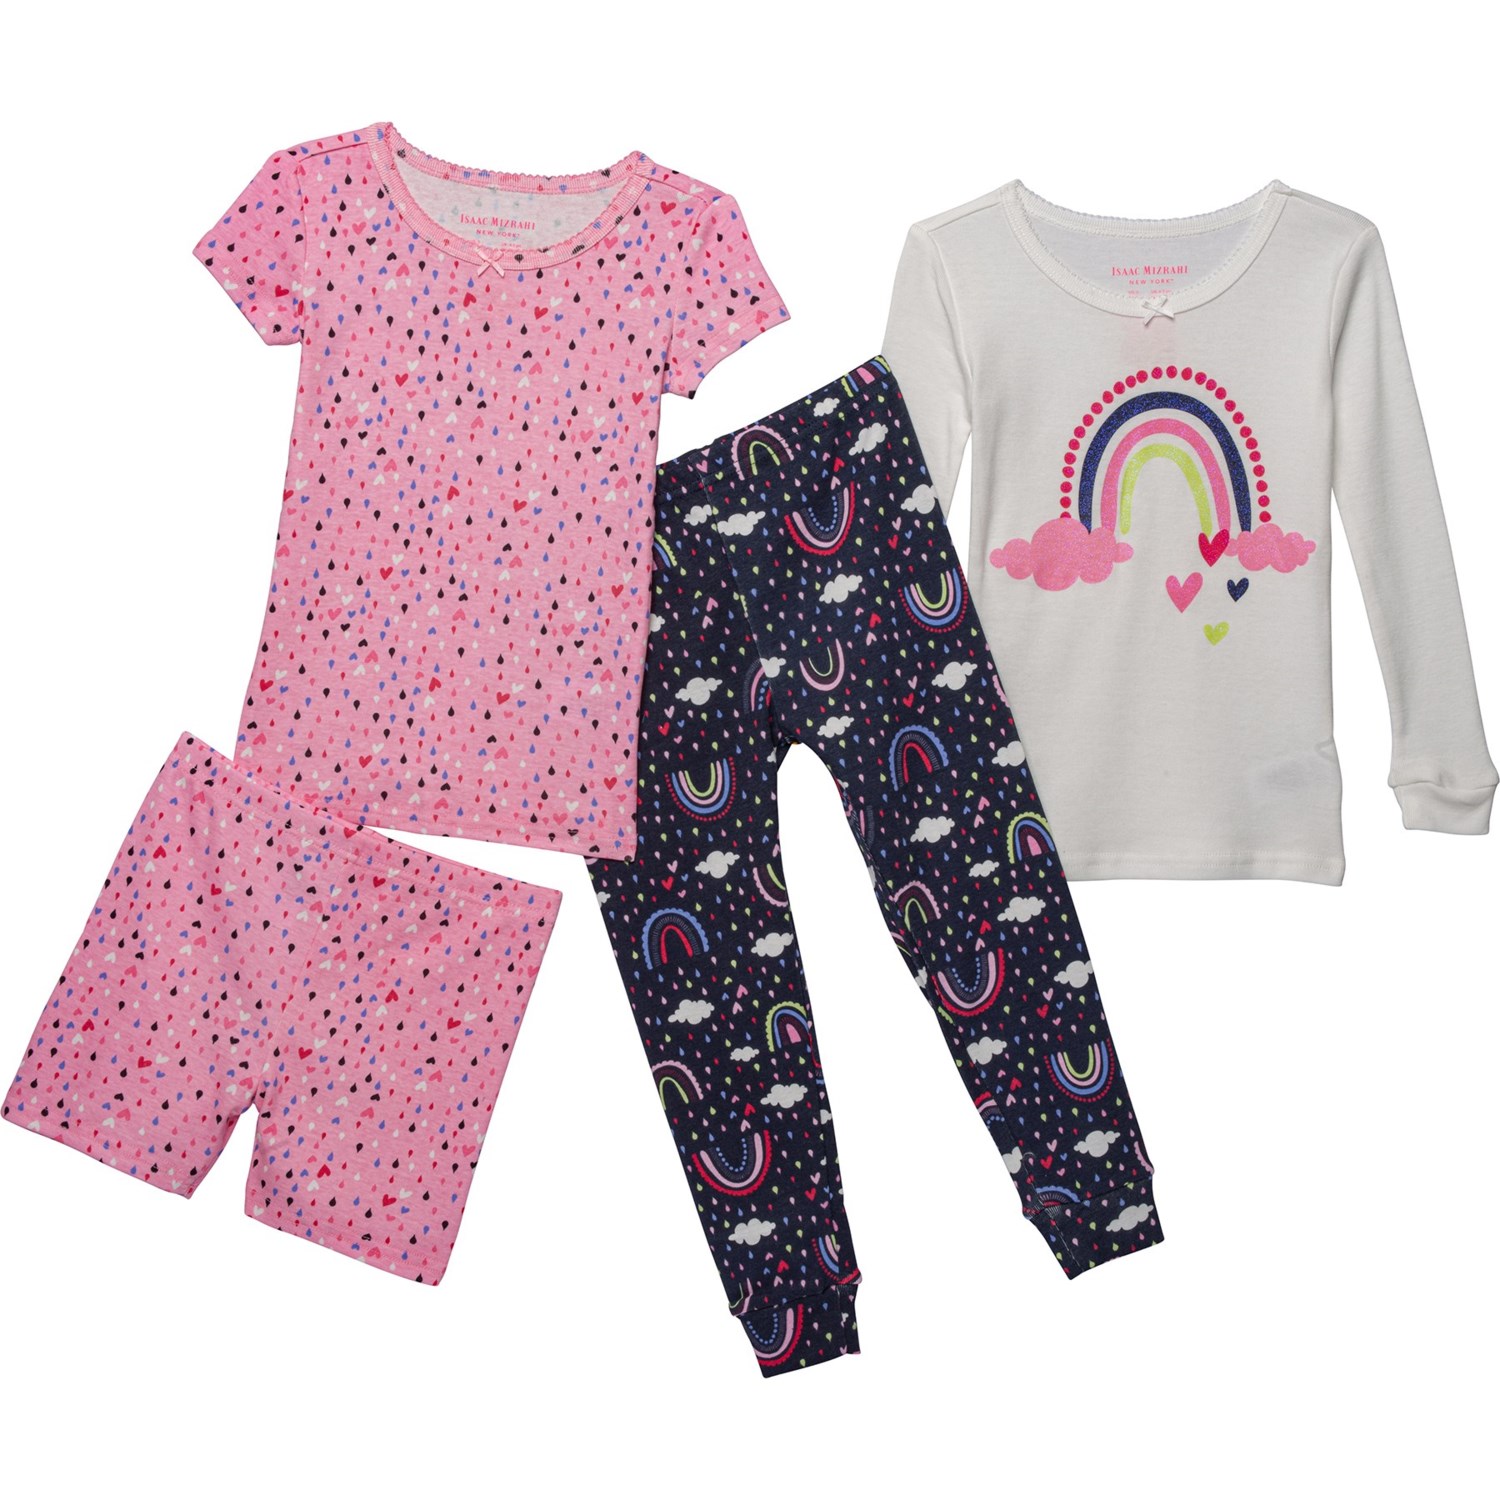 Isaac Mizrahi Toddler Girls Tight-Fit Pajama Sets - Short and Long Sleeve